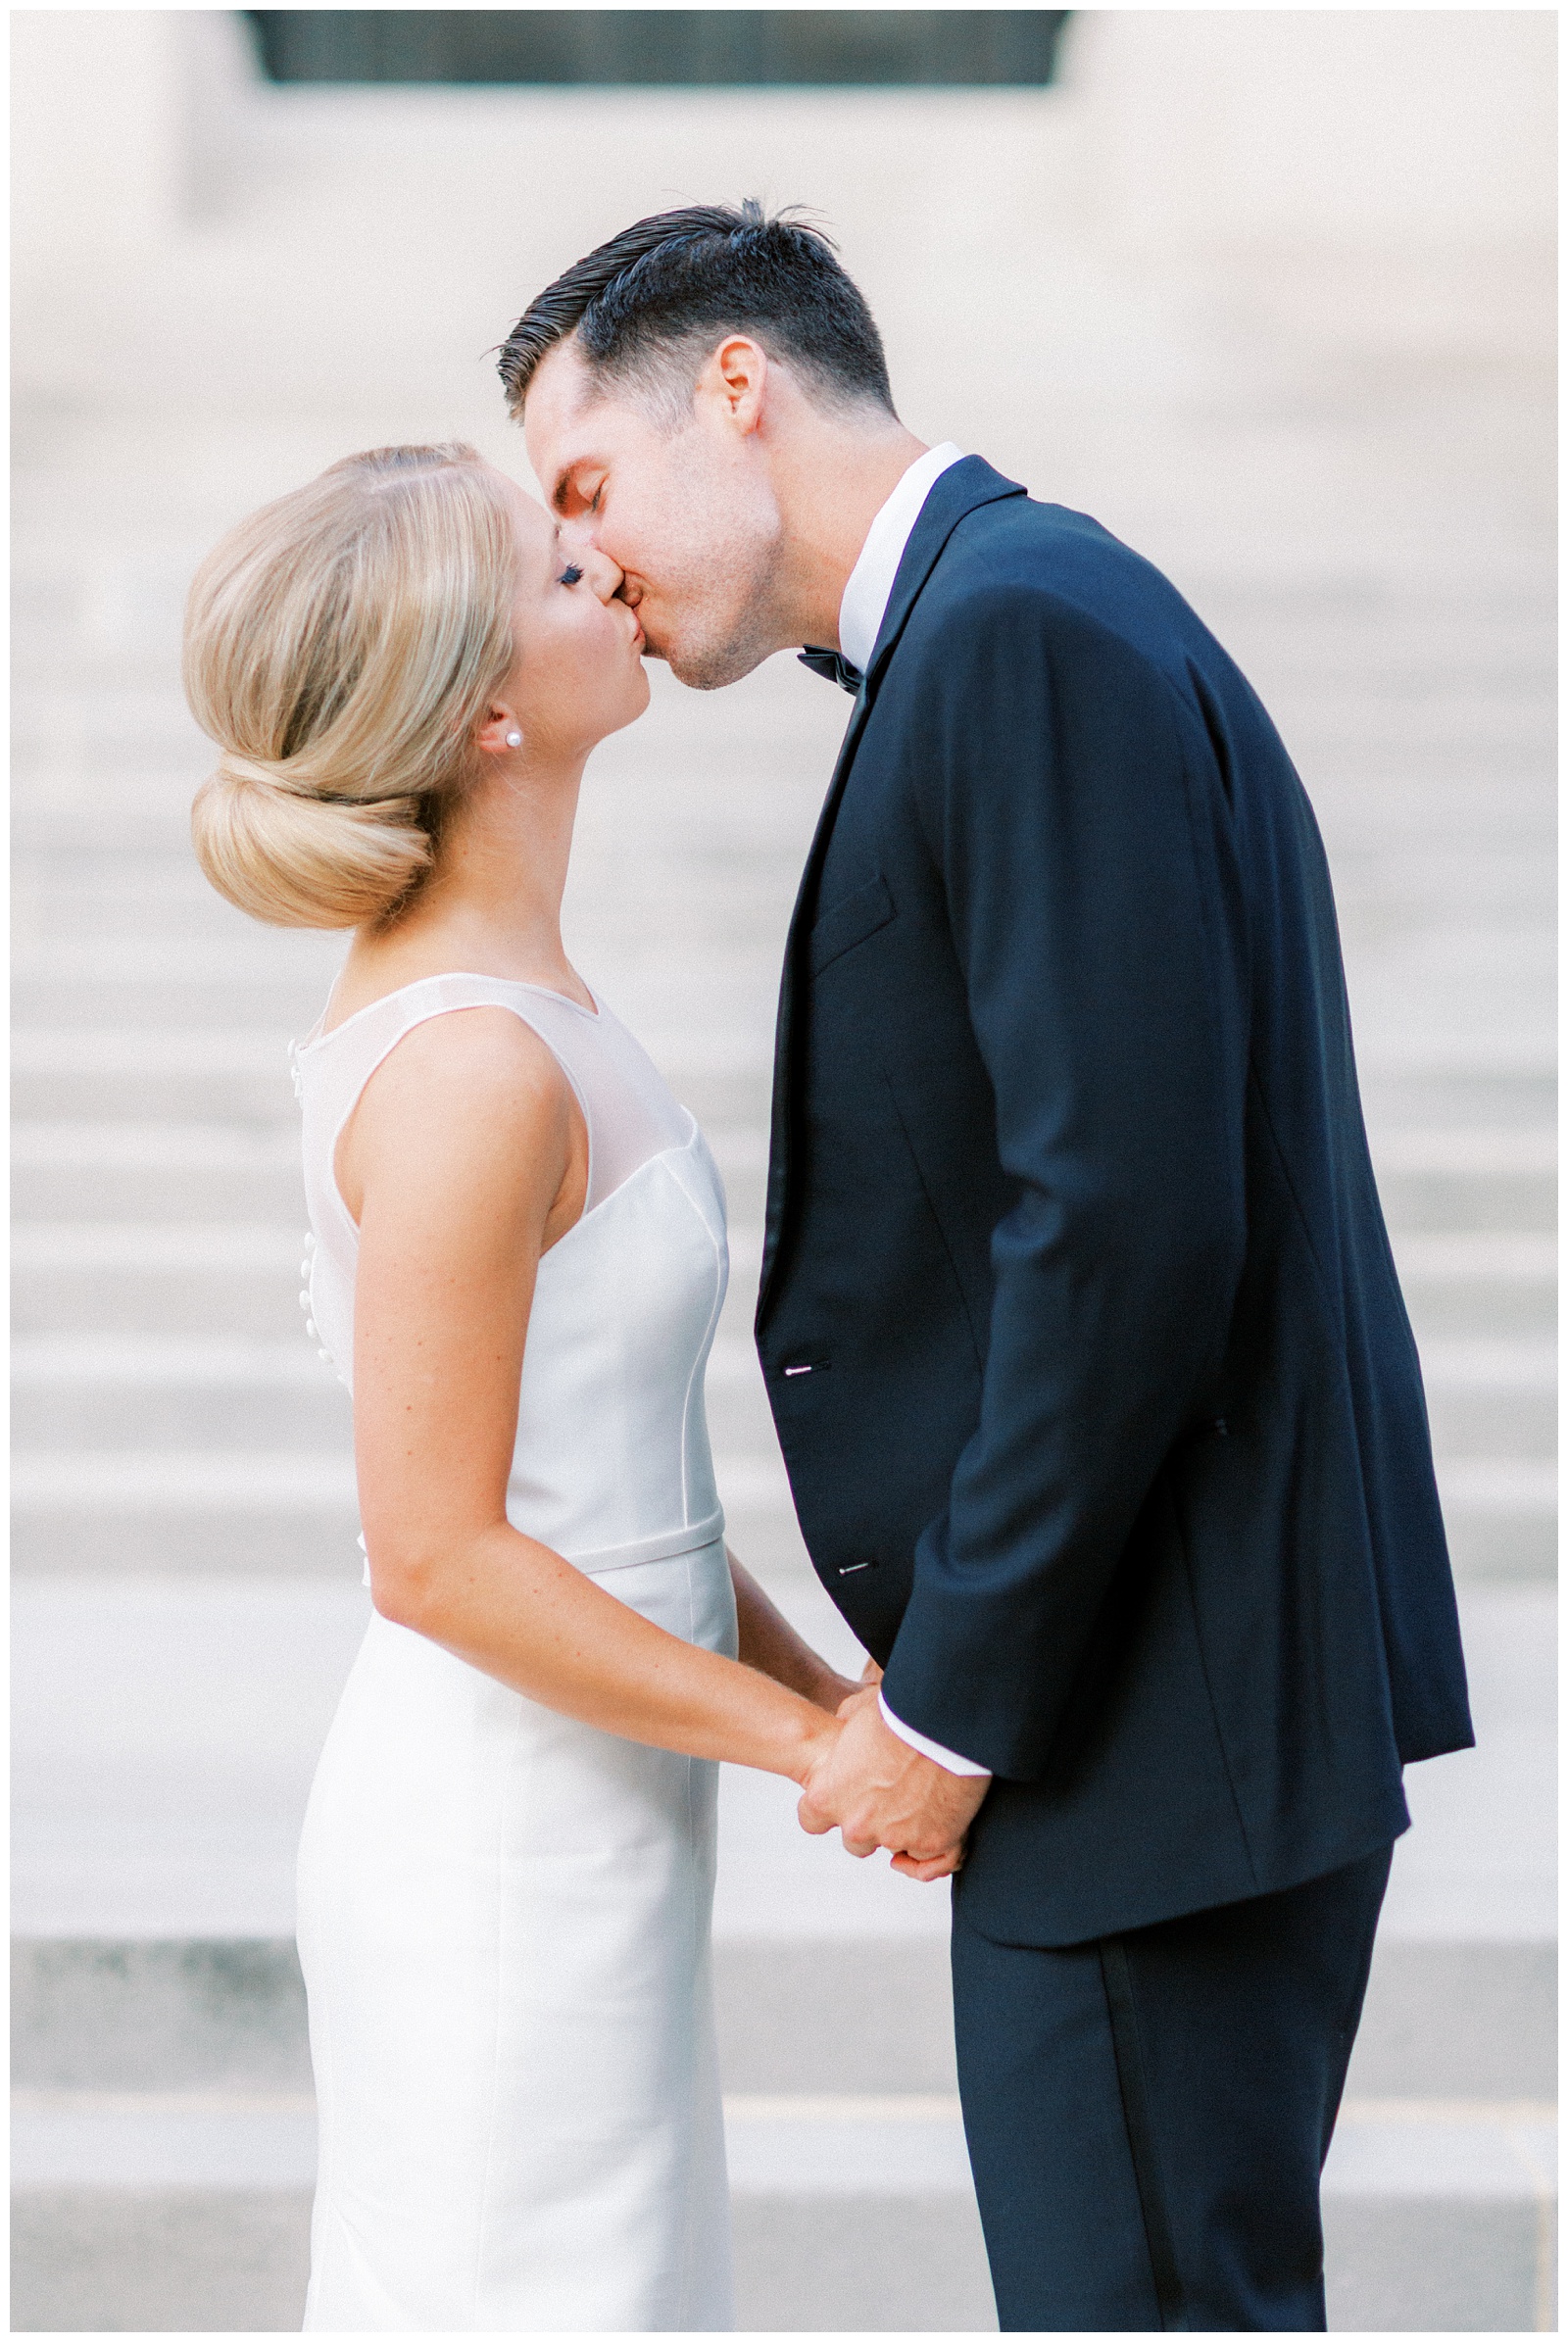 Carnegie Institute For Science-DC Wedding Photographer-Neva Sullivan Photography_0003.jpg